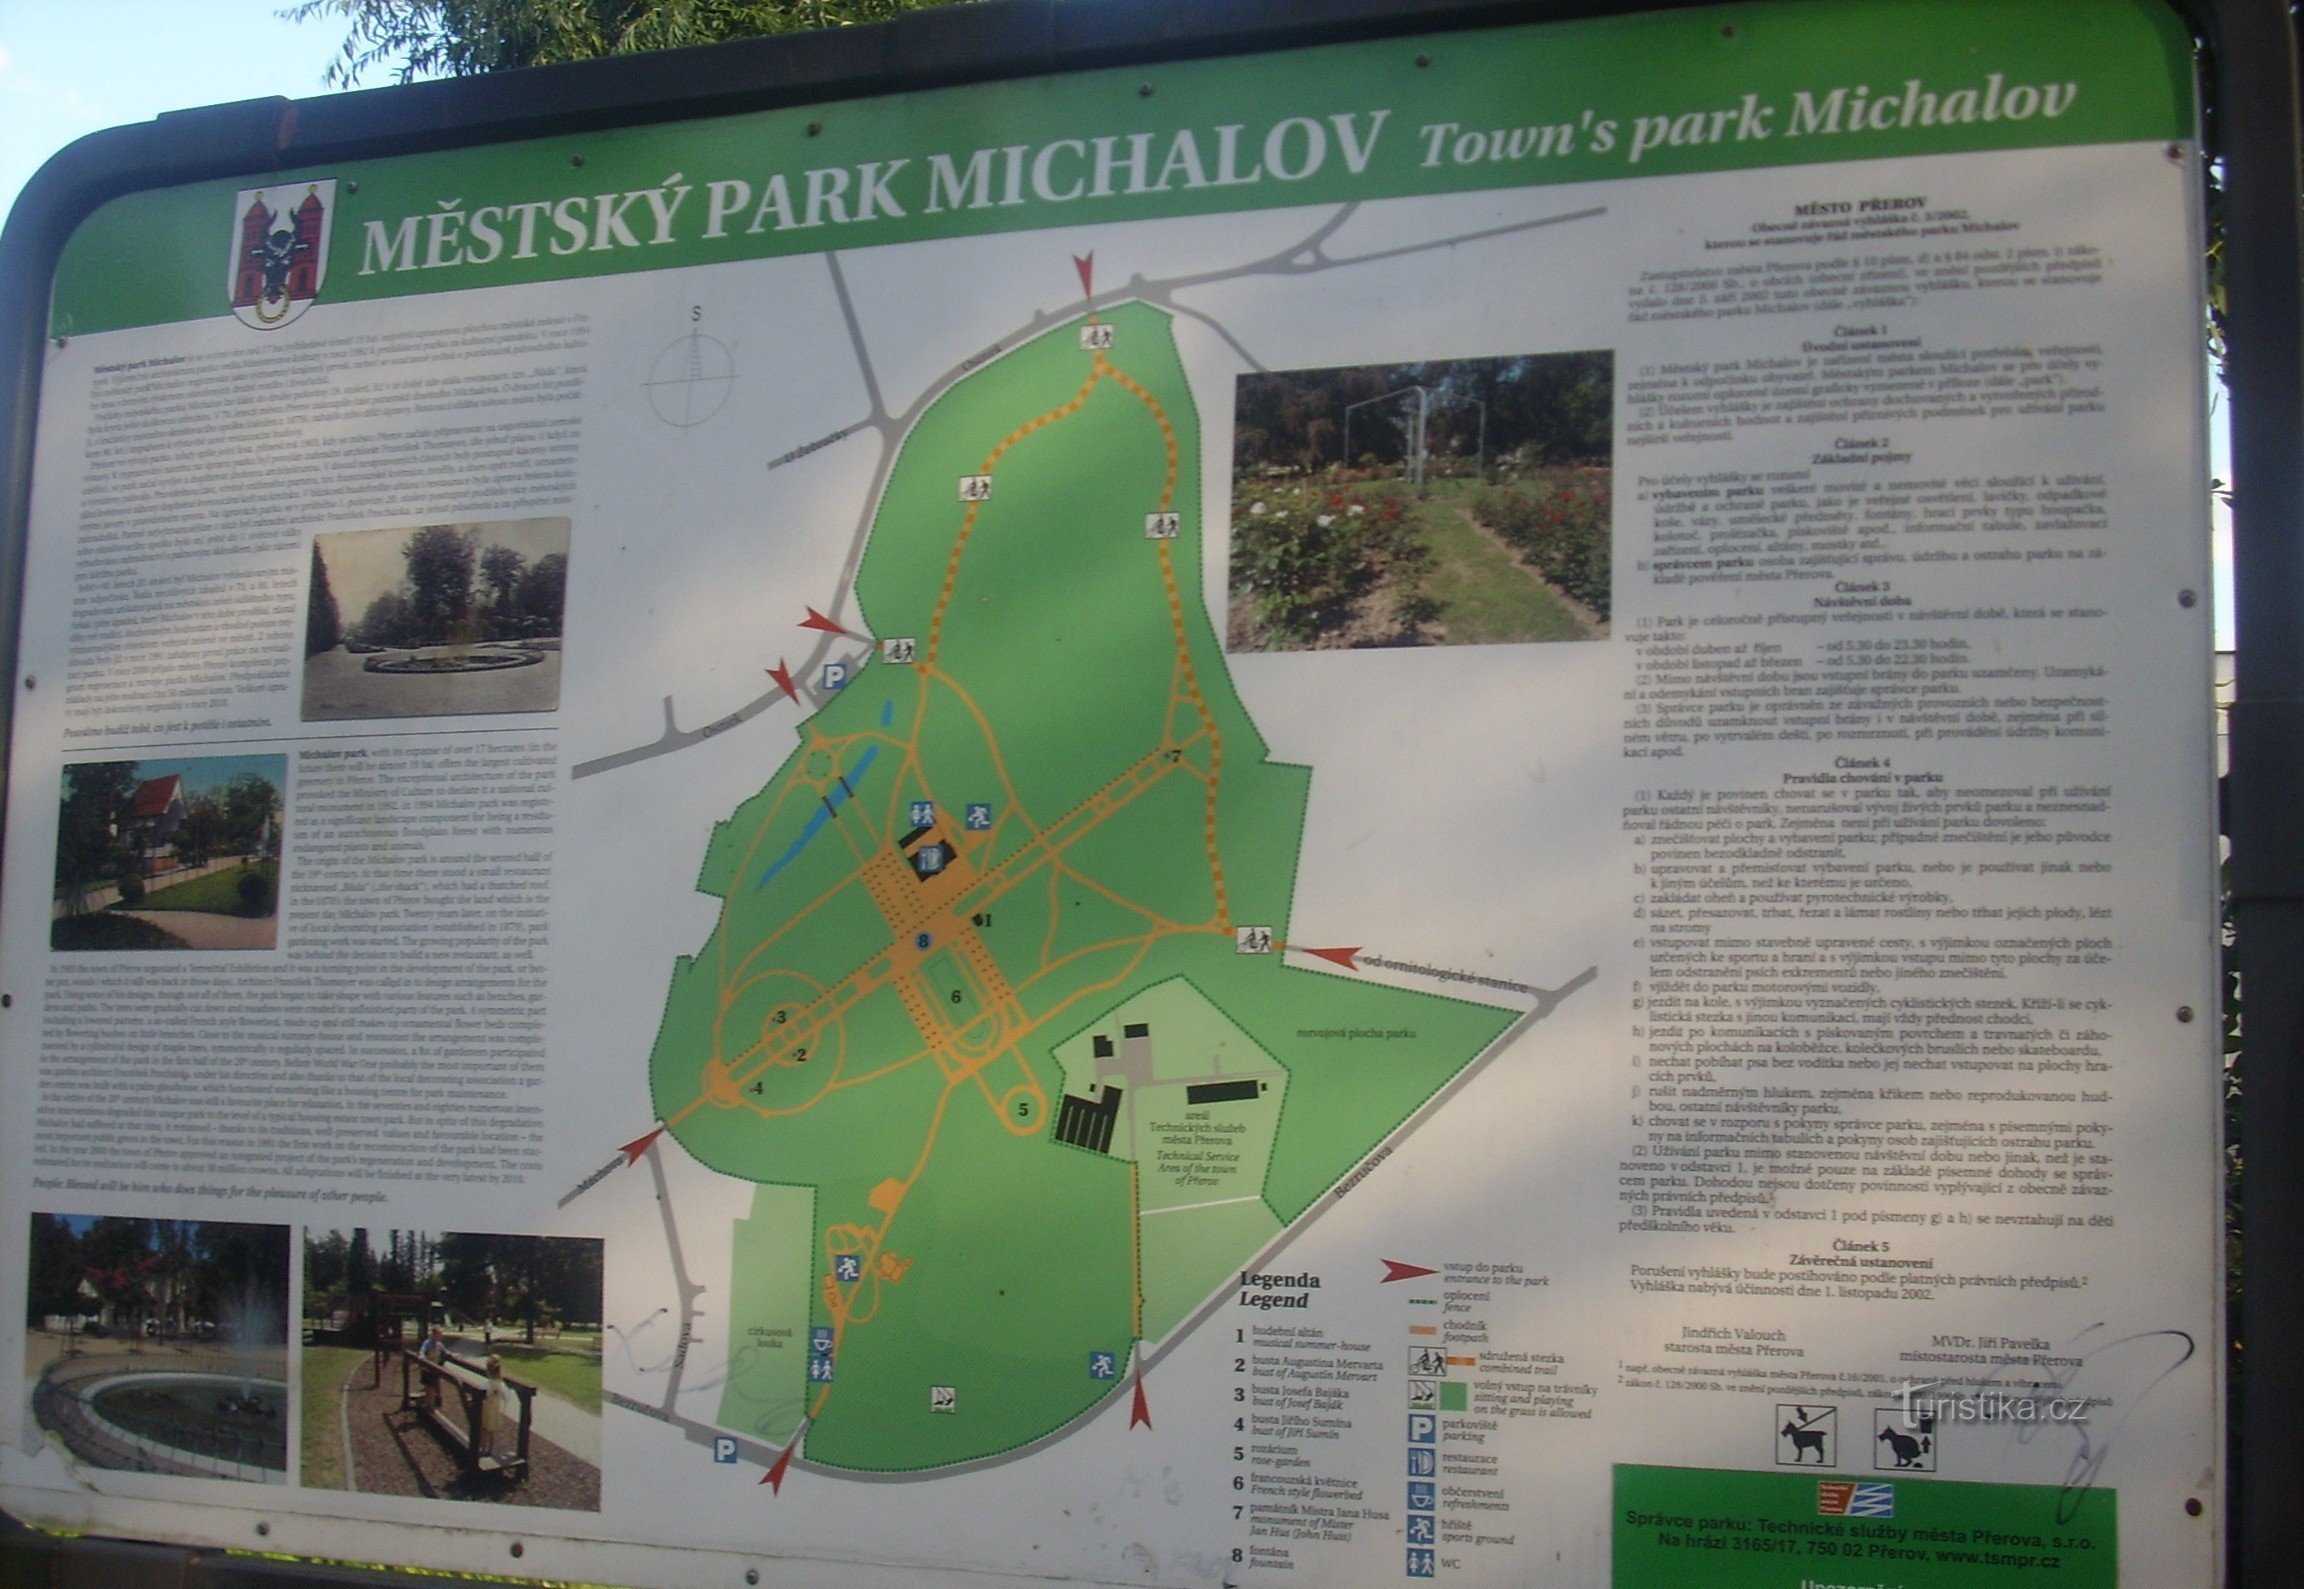 Michalov City Park i Přerov